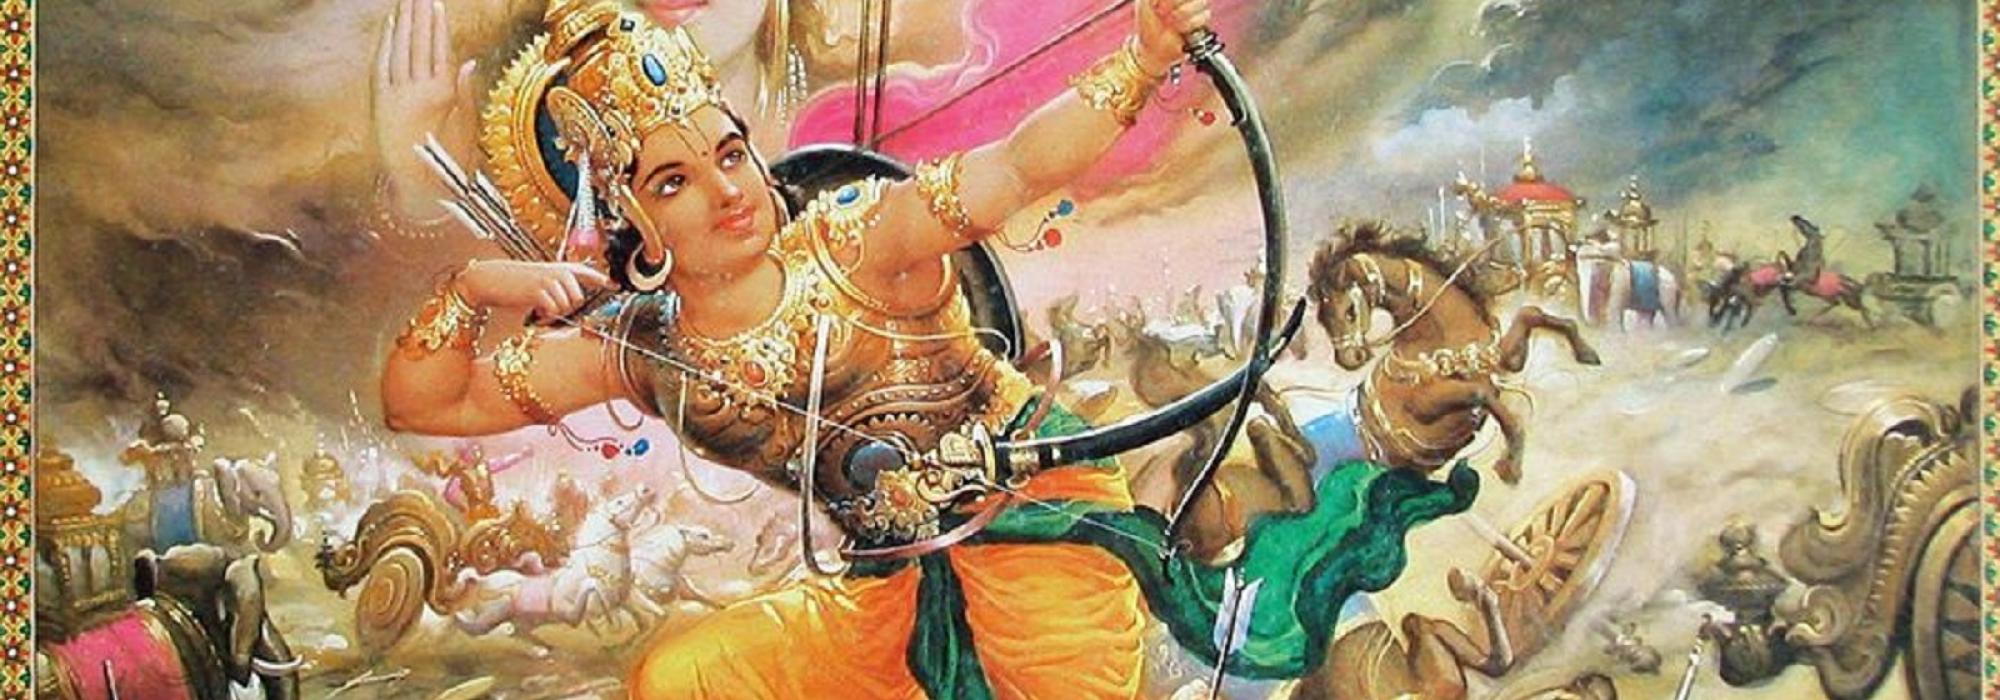 Индийский эпос 7 букв. Битва Арджуны. Махабхарата 2013 Баларама. Кришна на колеснице с Арджуной. Стимпанк Арджуна Кришна битва богов.